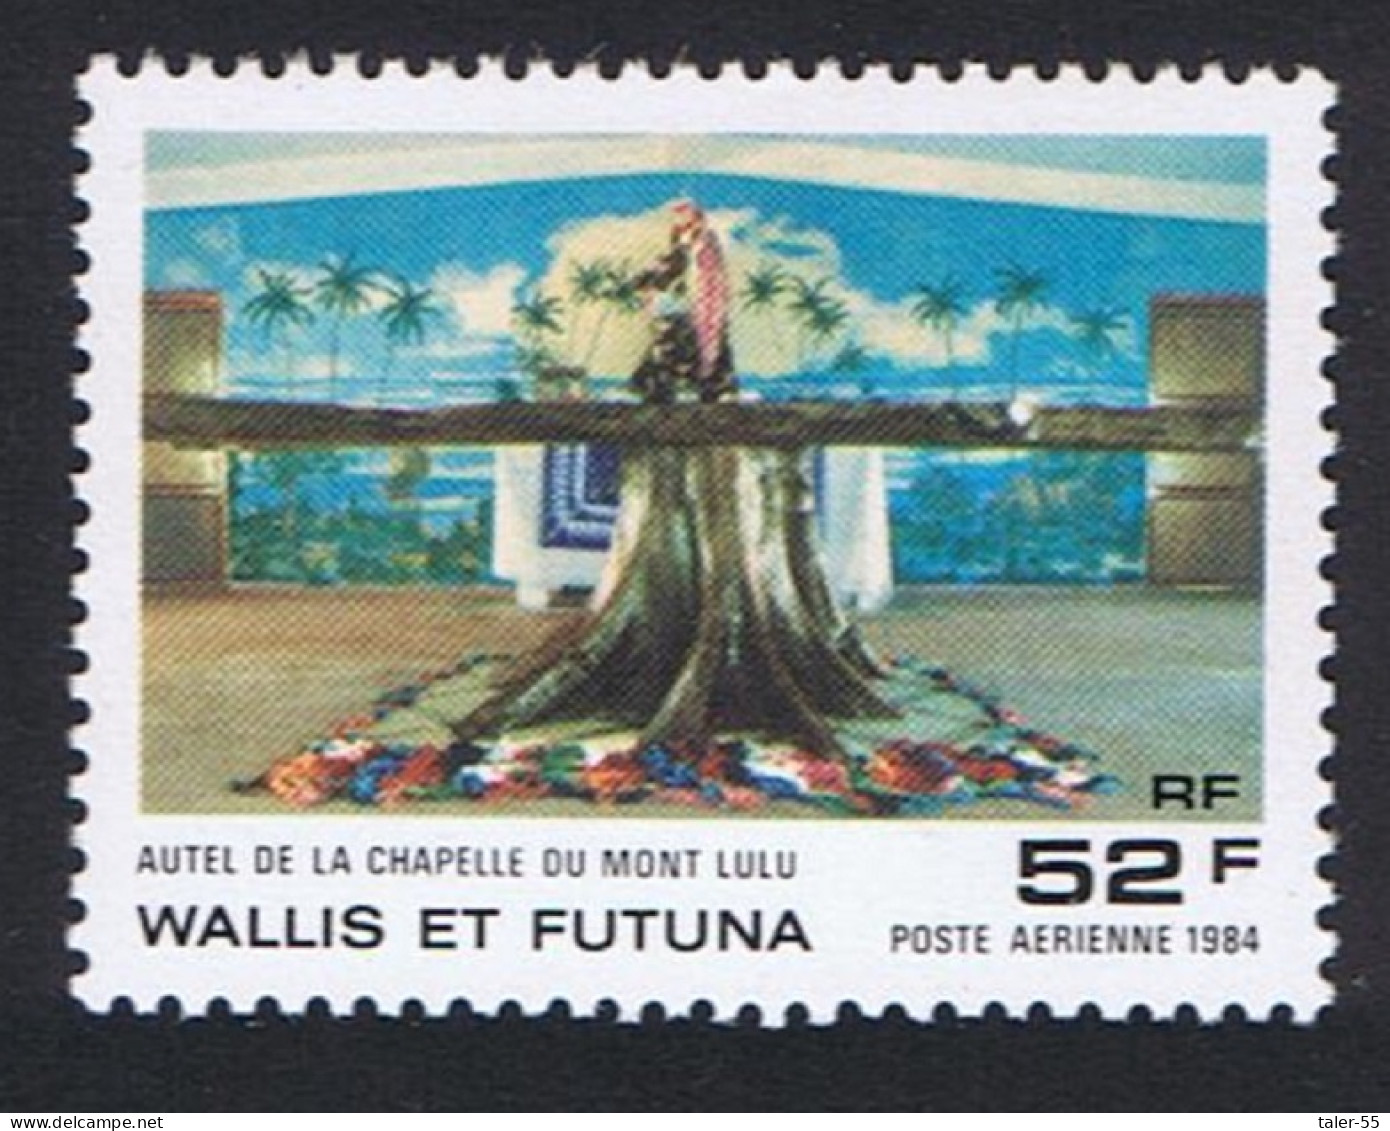 Wallis And Futuna Altar Mount Lulu Chapel Airmail 1984 MNH SG#455 Sc#C138 - Ongebruikt